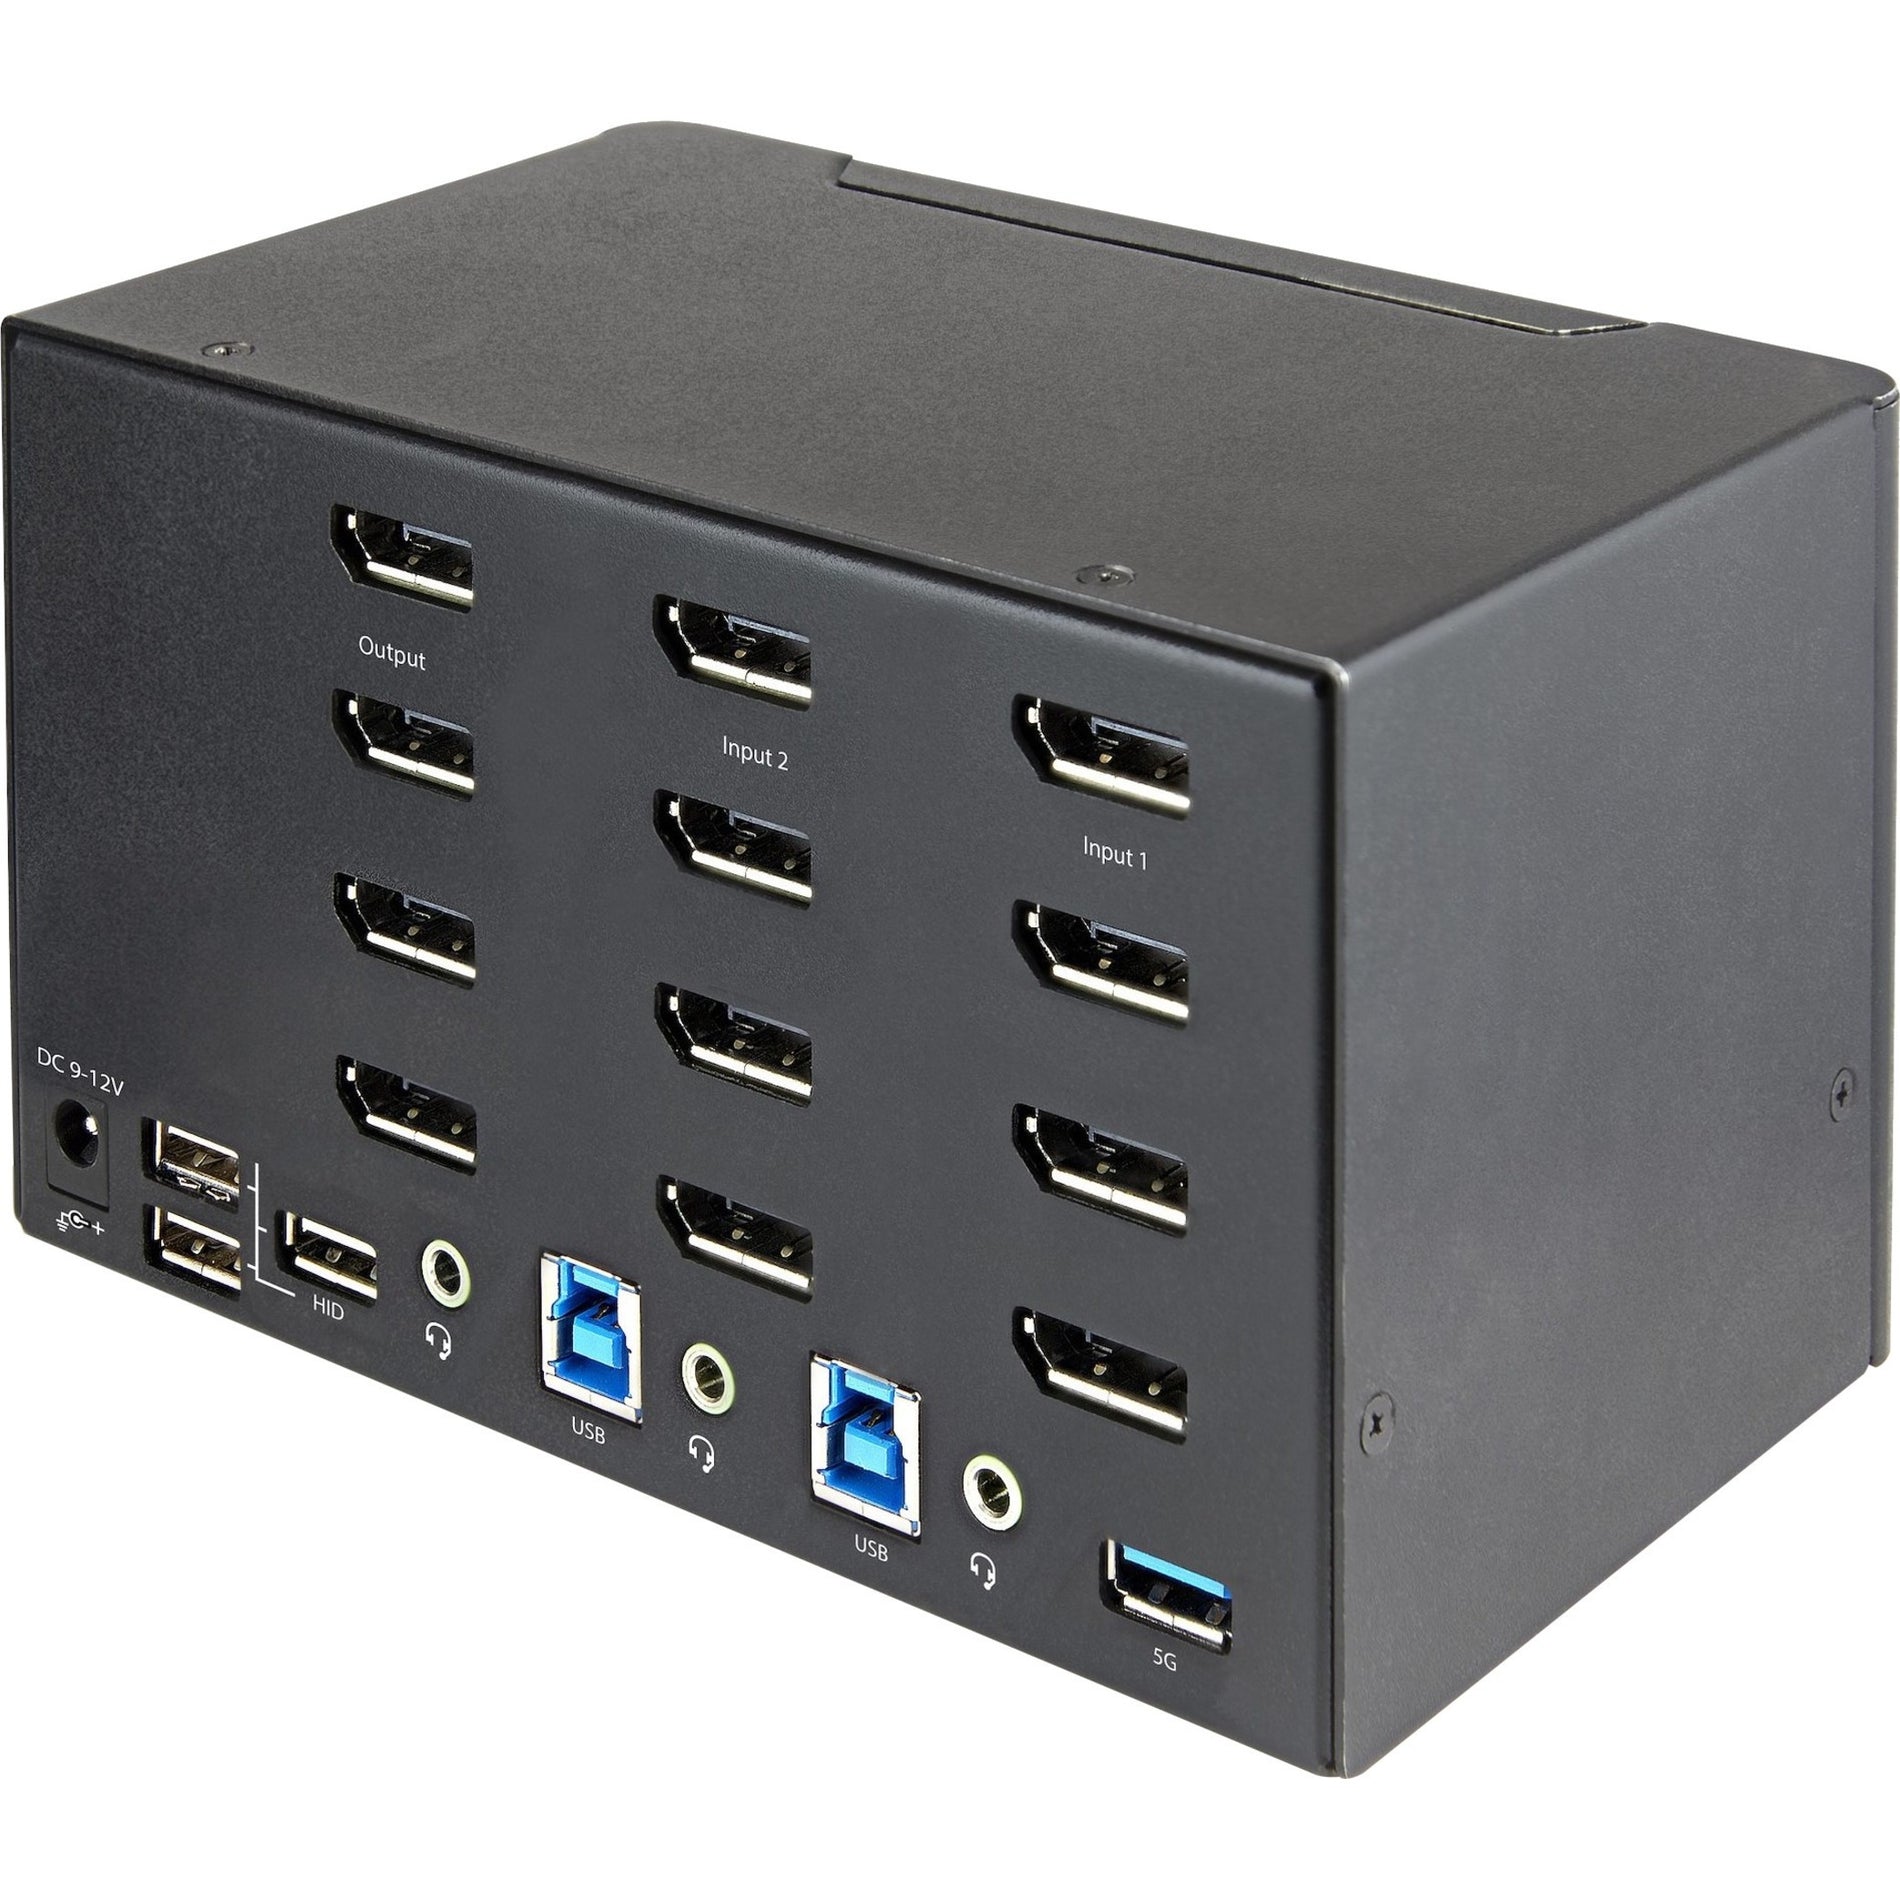 StarTech.com SV231QDPU34K 2 Port Quad Monitor DisplayPort KVM Switch 4K 60Hz UHD HDR, DP 1.2 KVM Switch, 2 Port USB 3.0 Hub, 4x USB HID, Audio, Hotkey